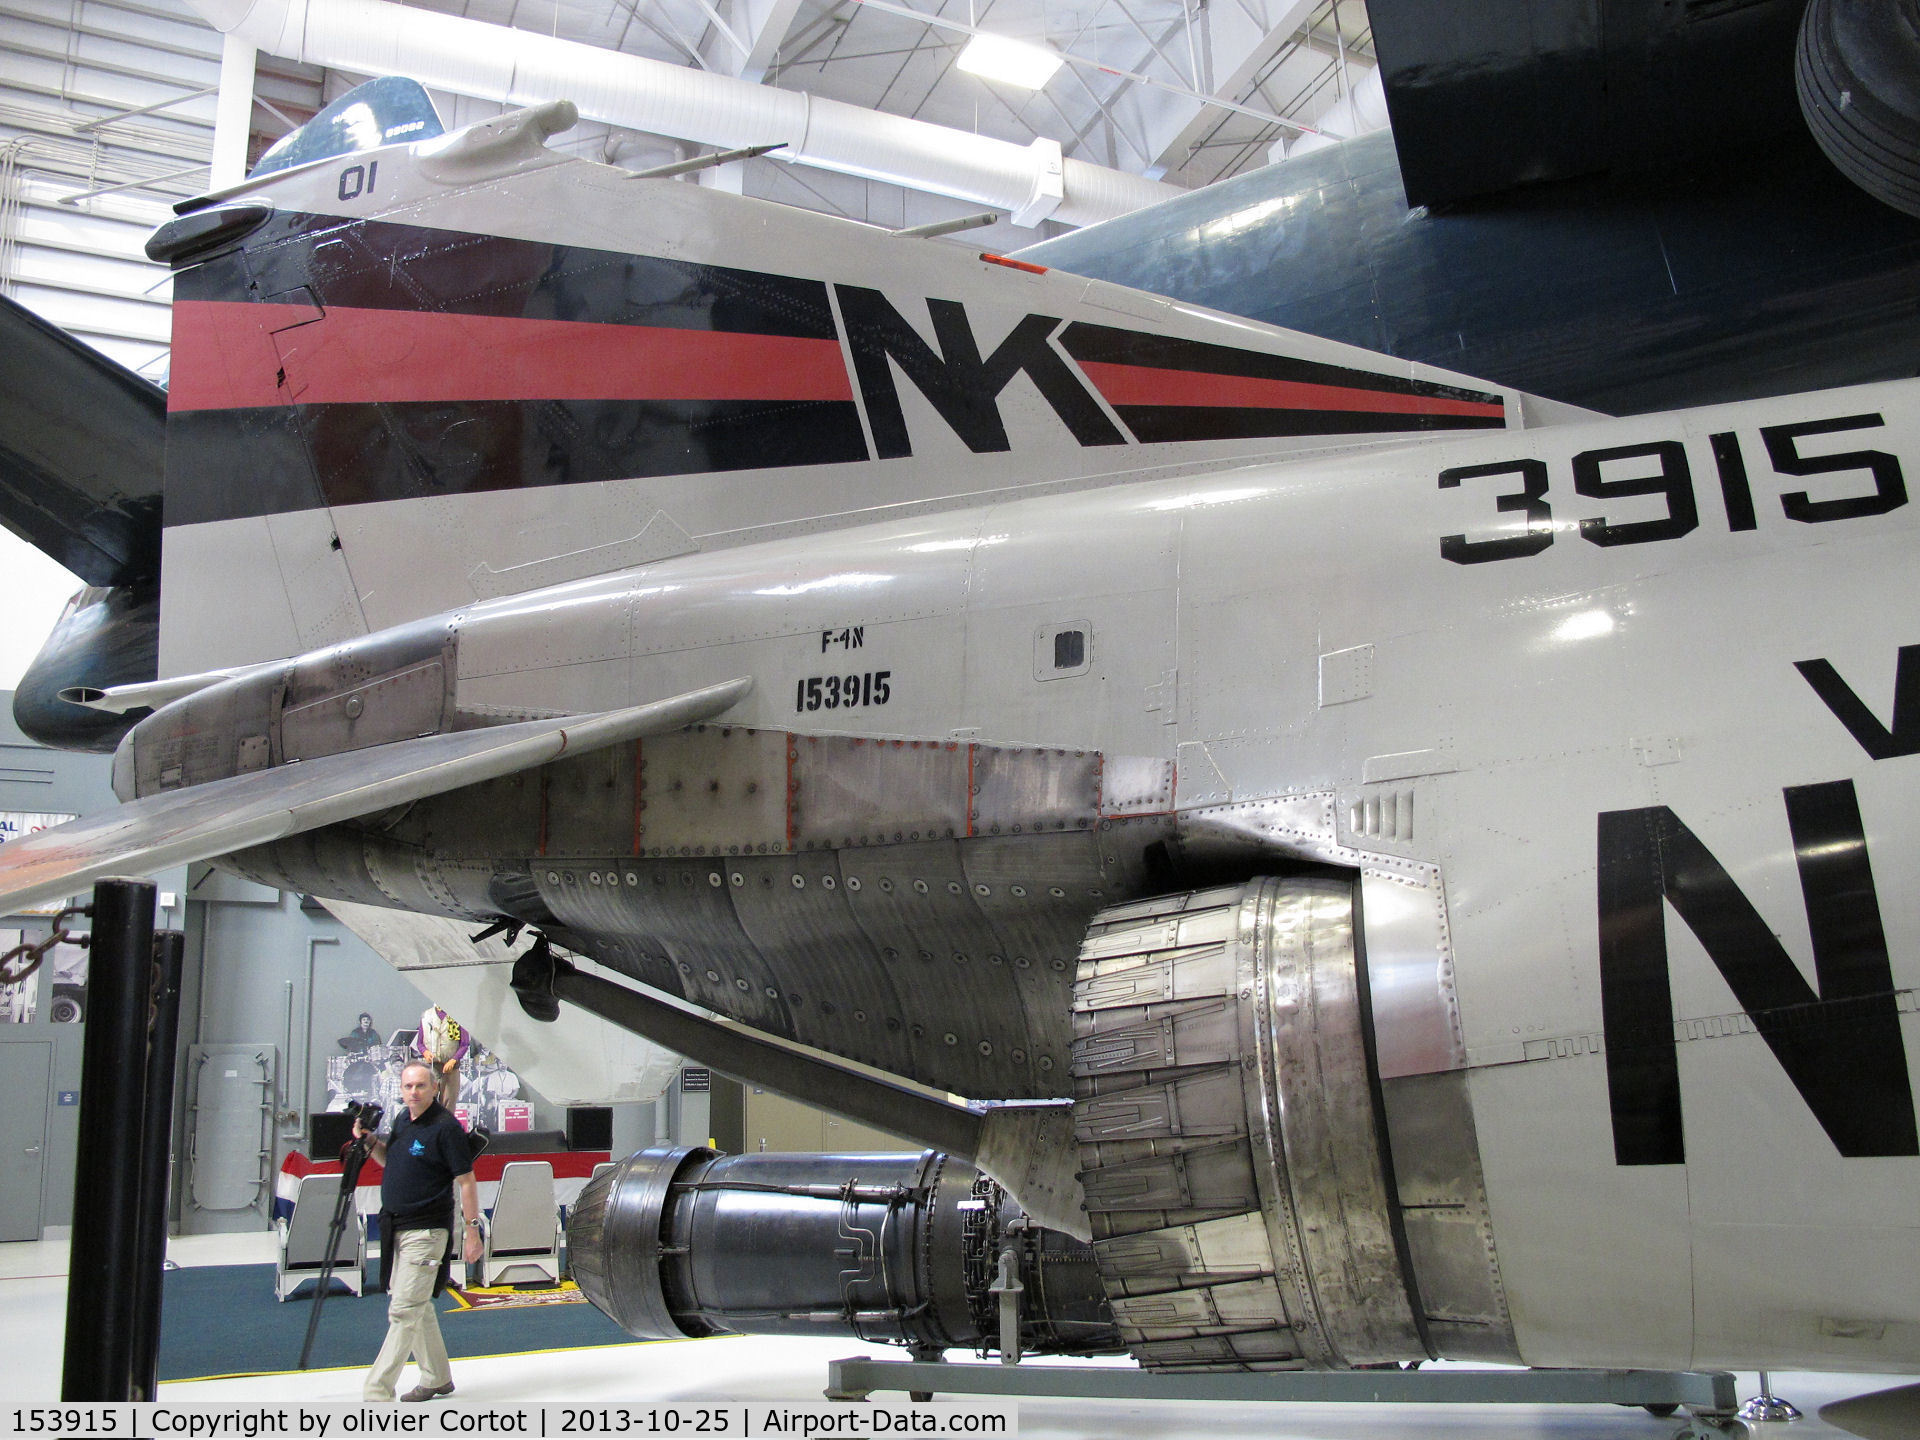 153915, McDonnell F-4N Phantom II C/N 1796, view on the tail